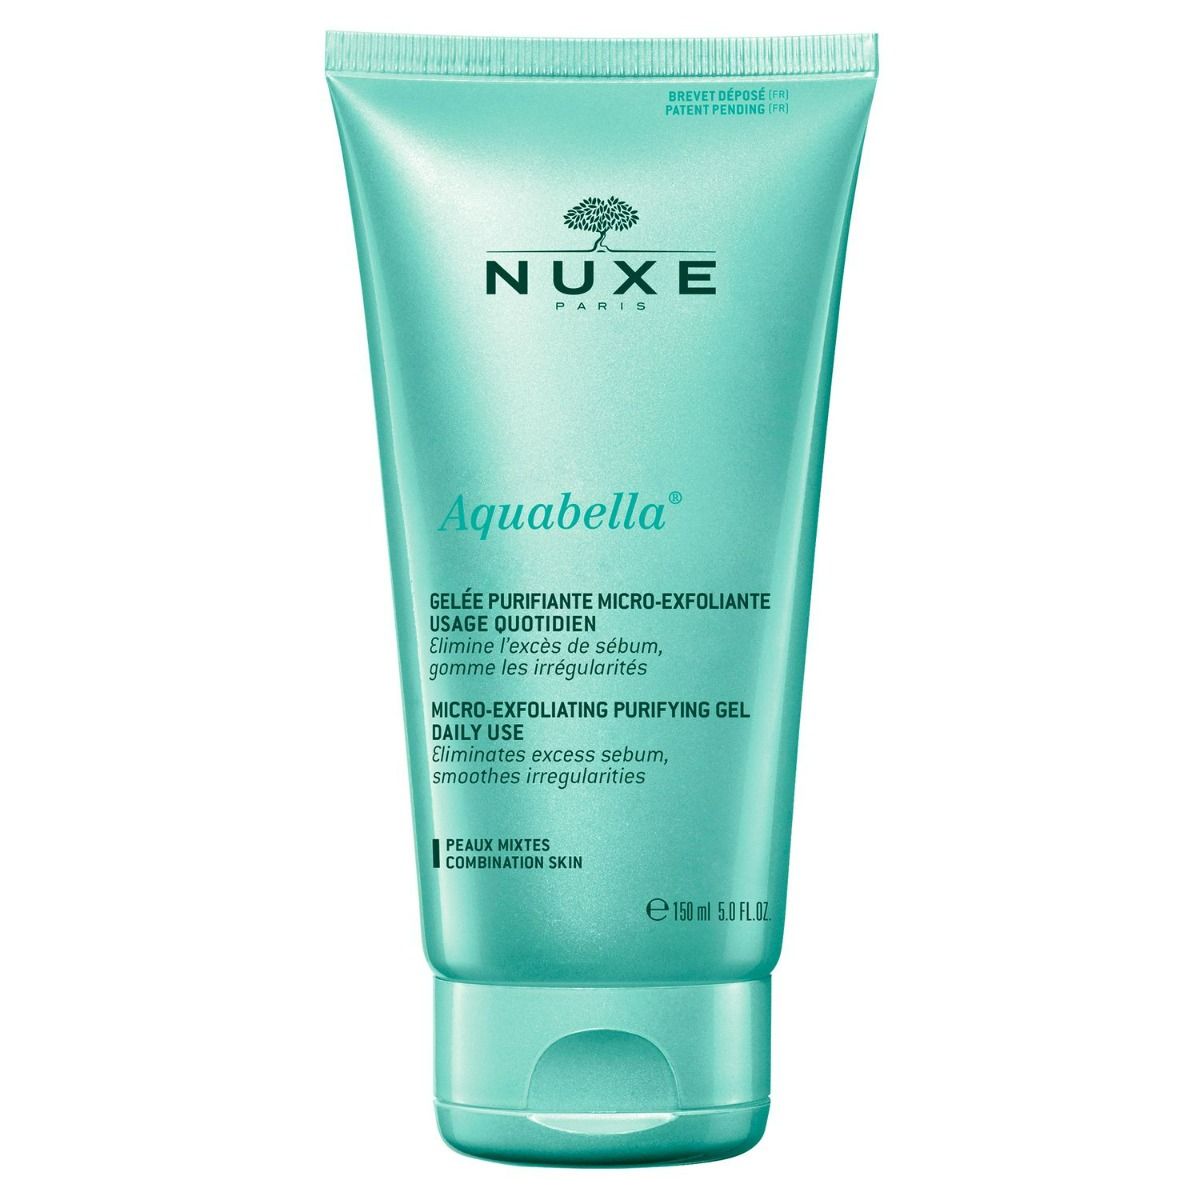 Nuxe Aquabella гель для лица, 150 ml